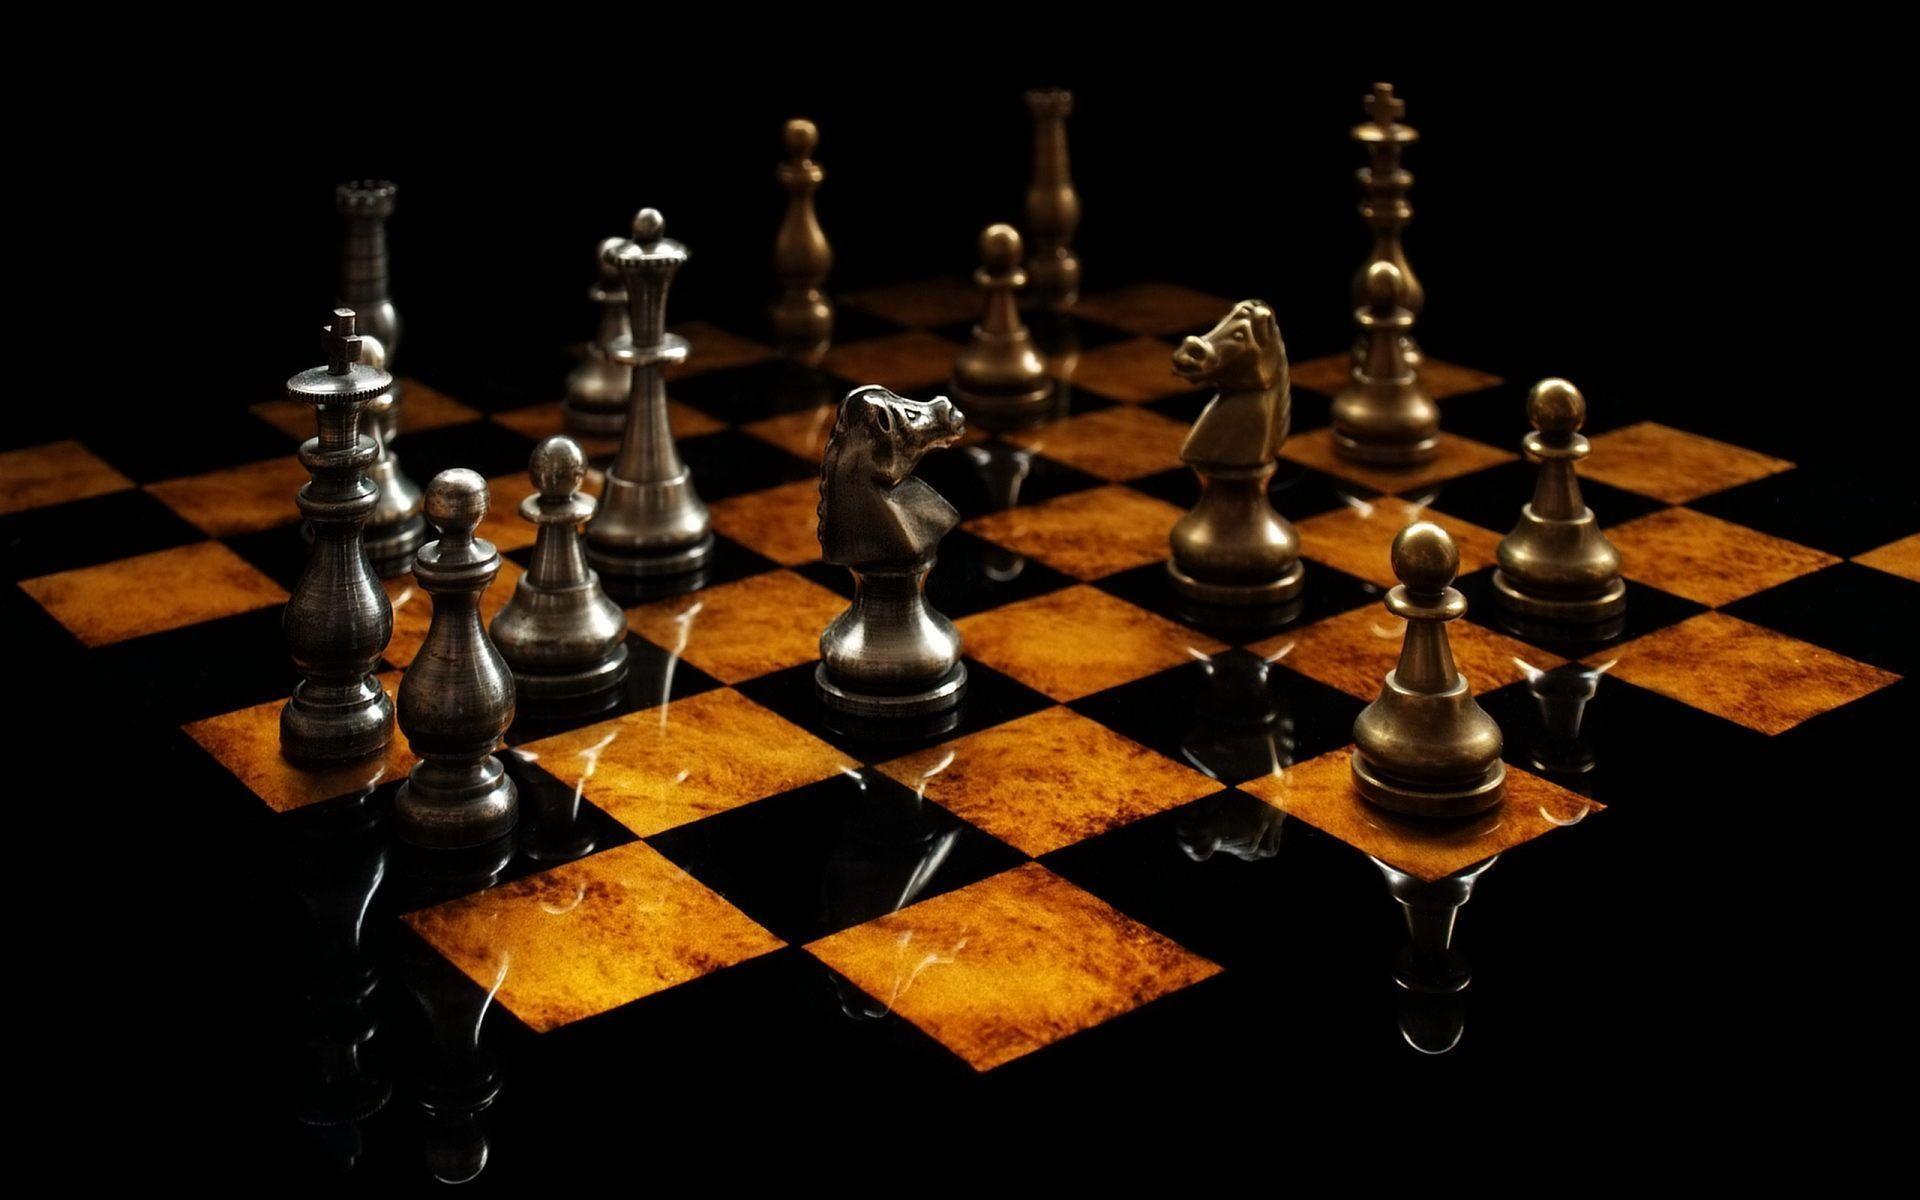 File:The chess players thomas eakins.jpeg - Wikipedia